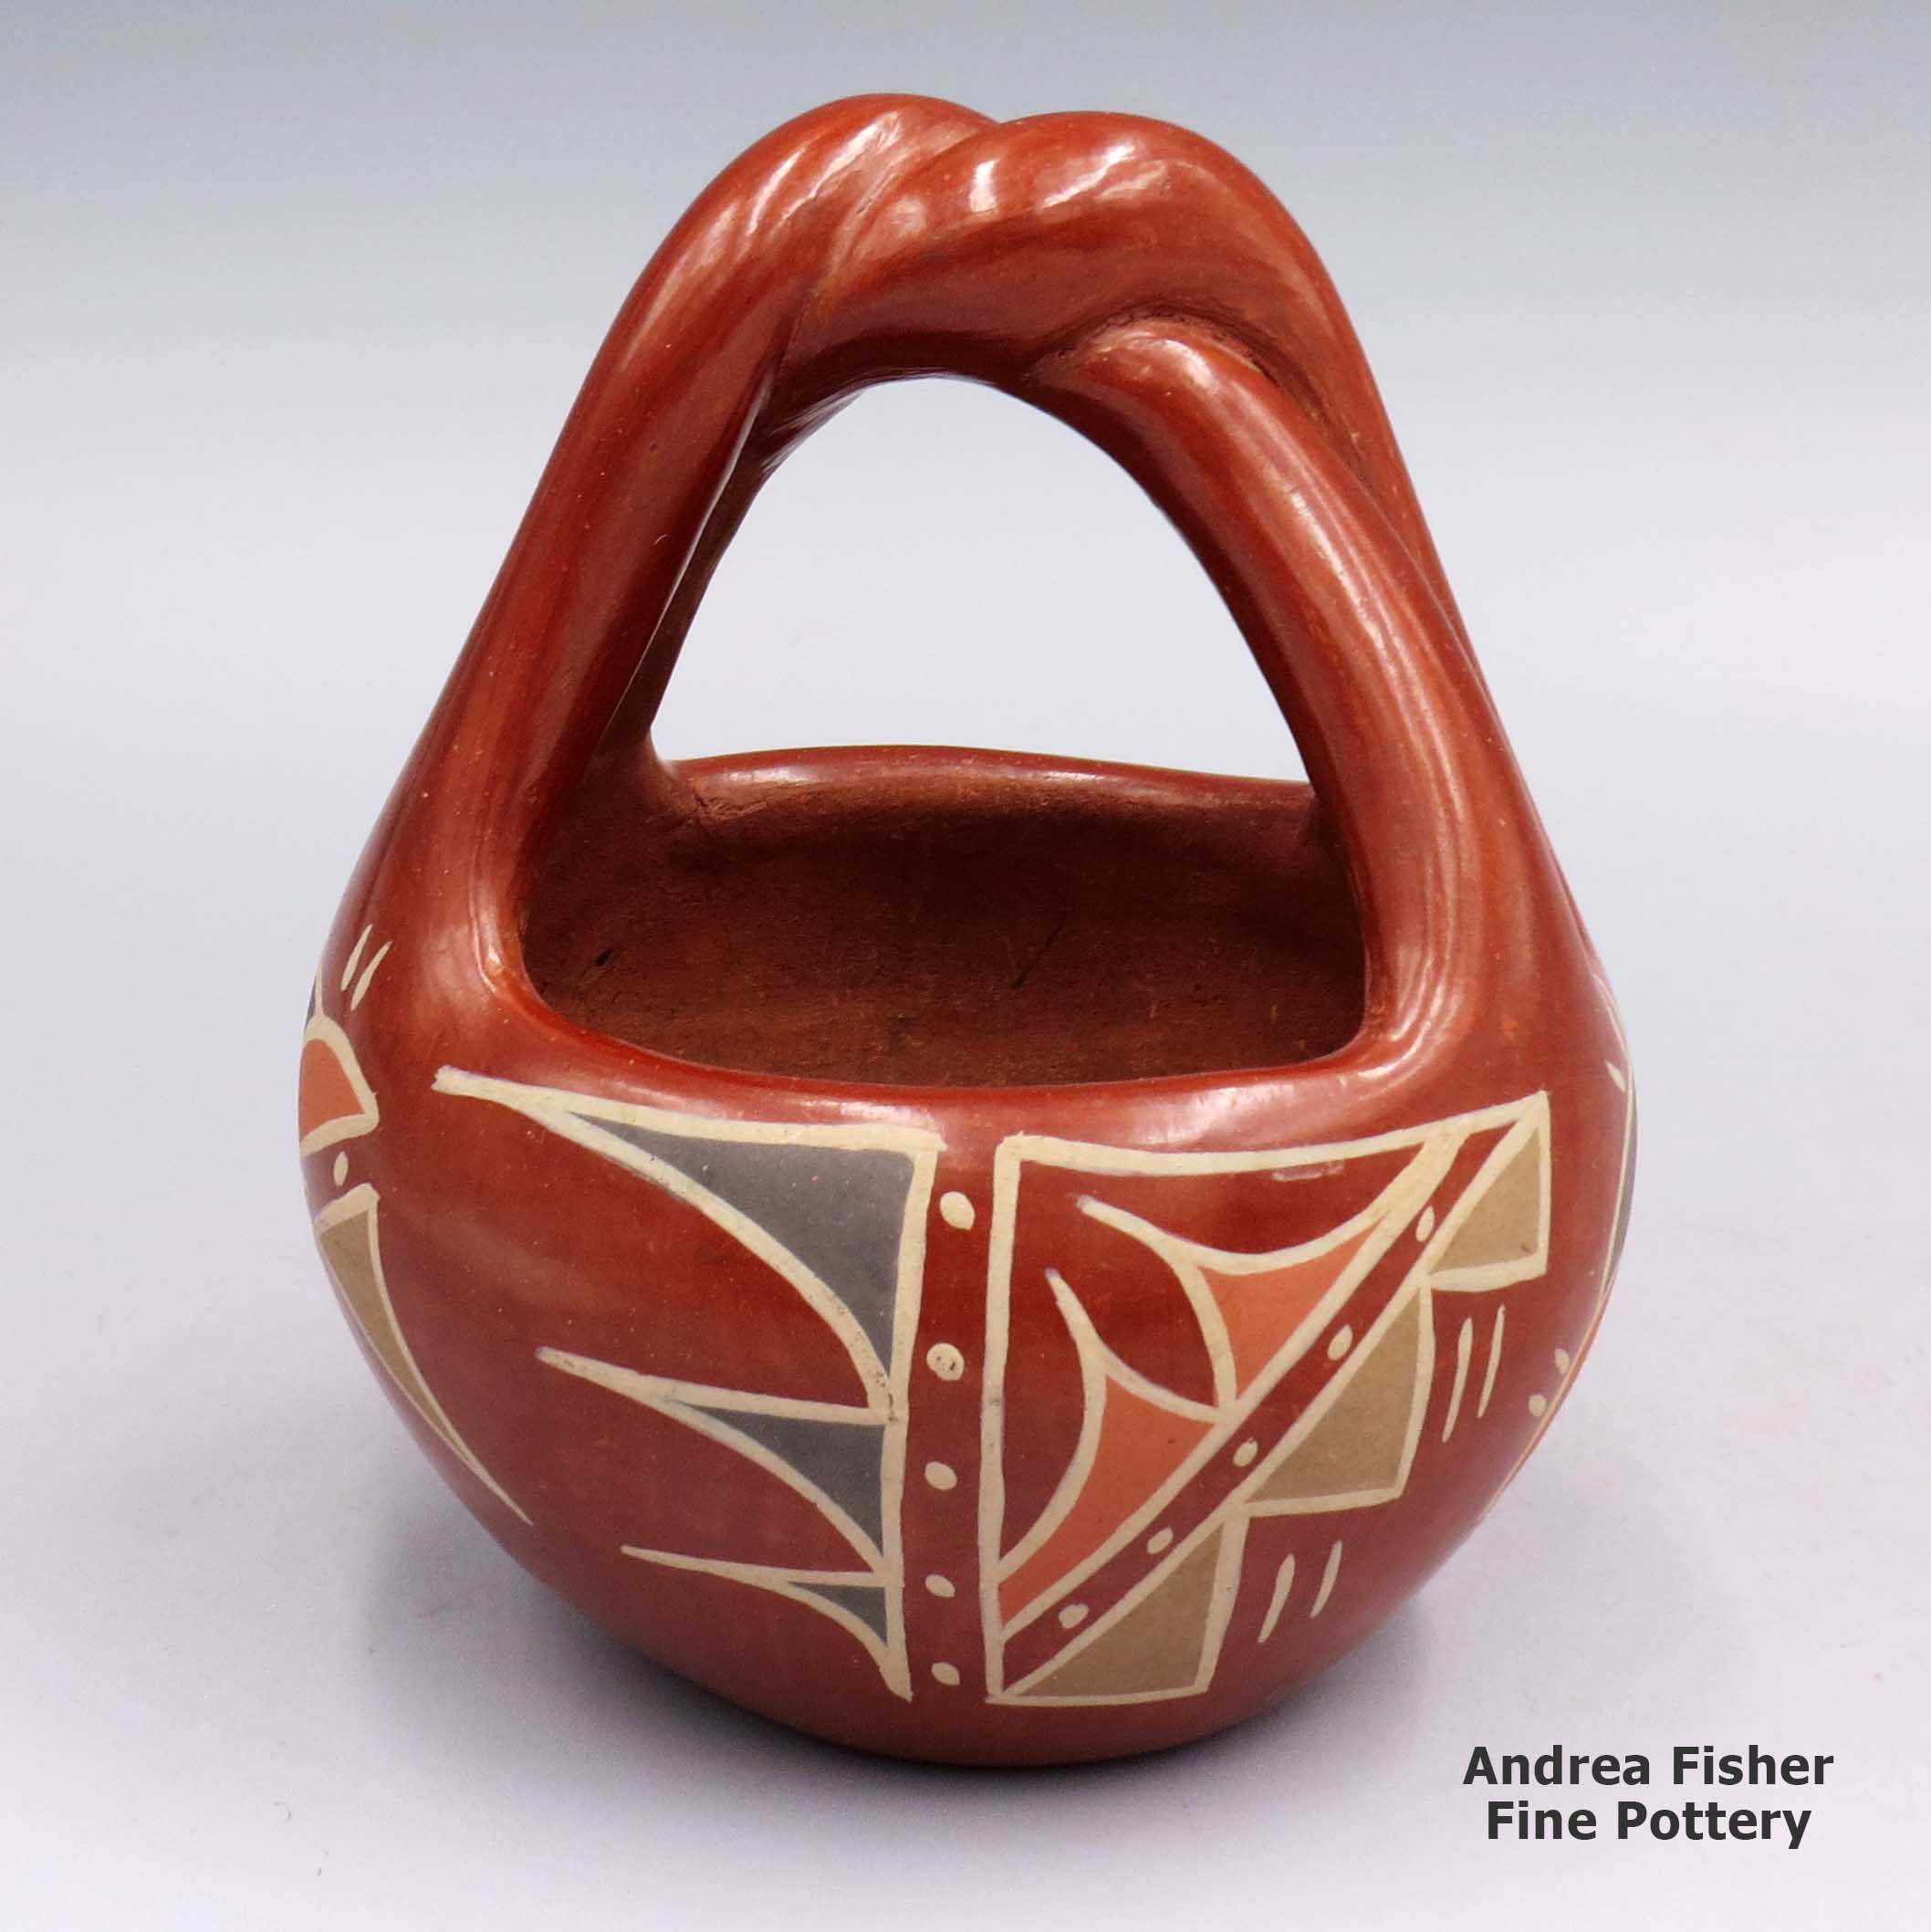 Pueblo pottery - Wikipedia